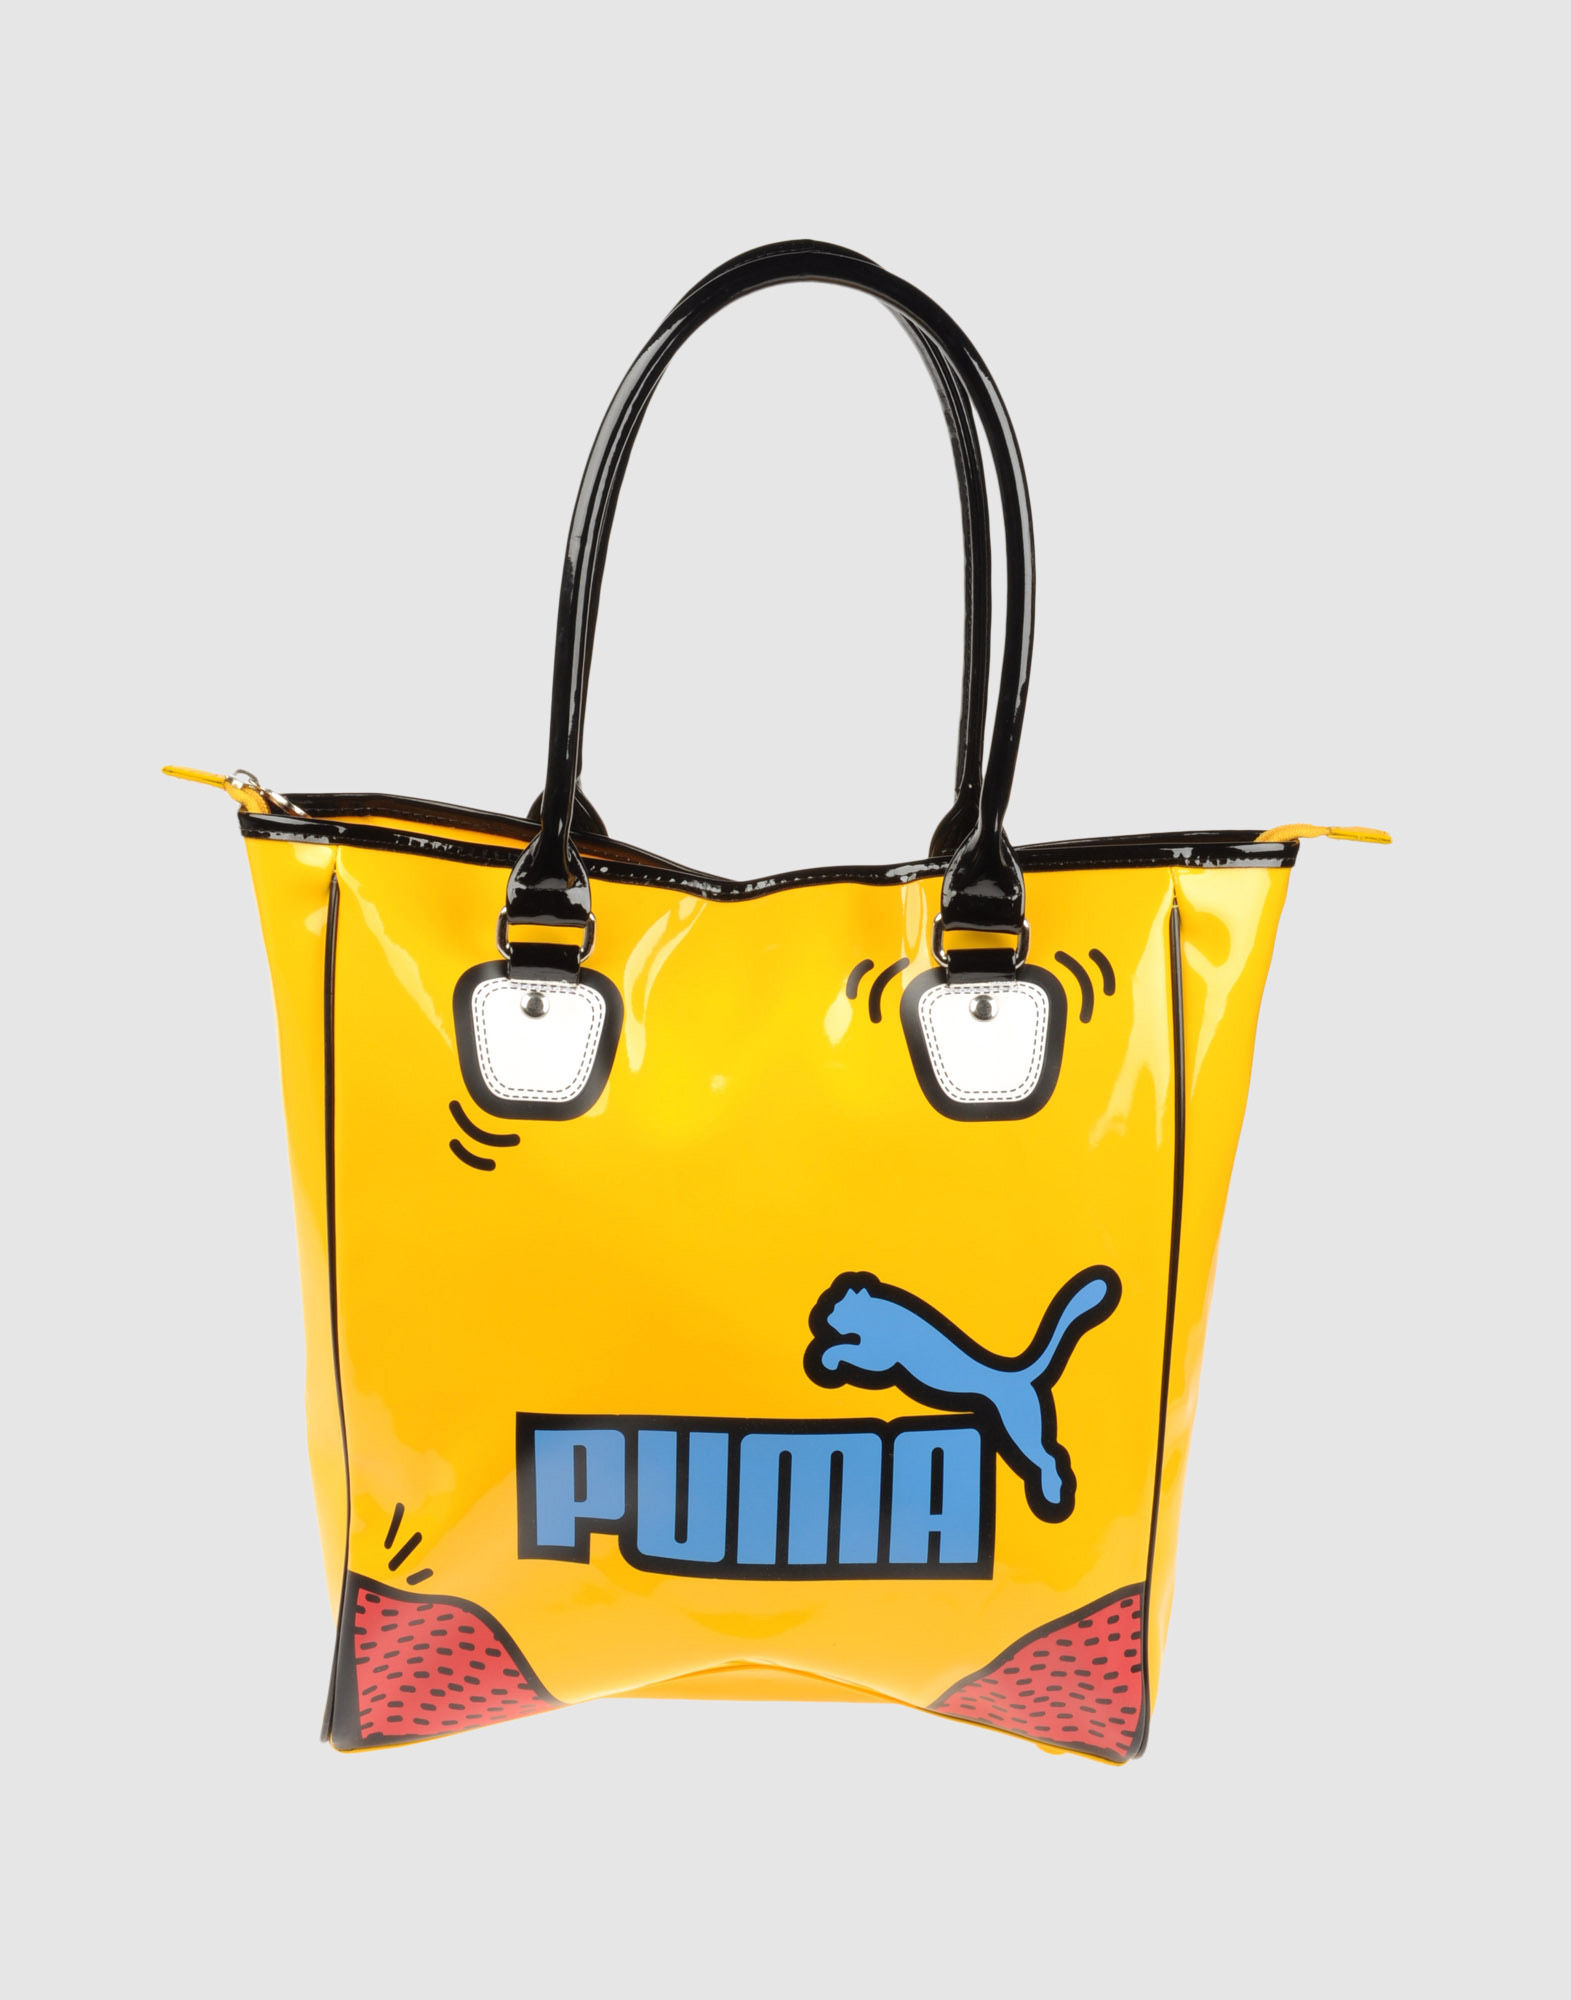 puma bags yellow